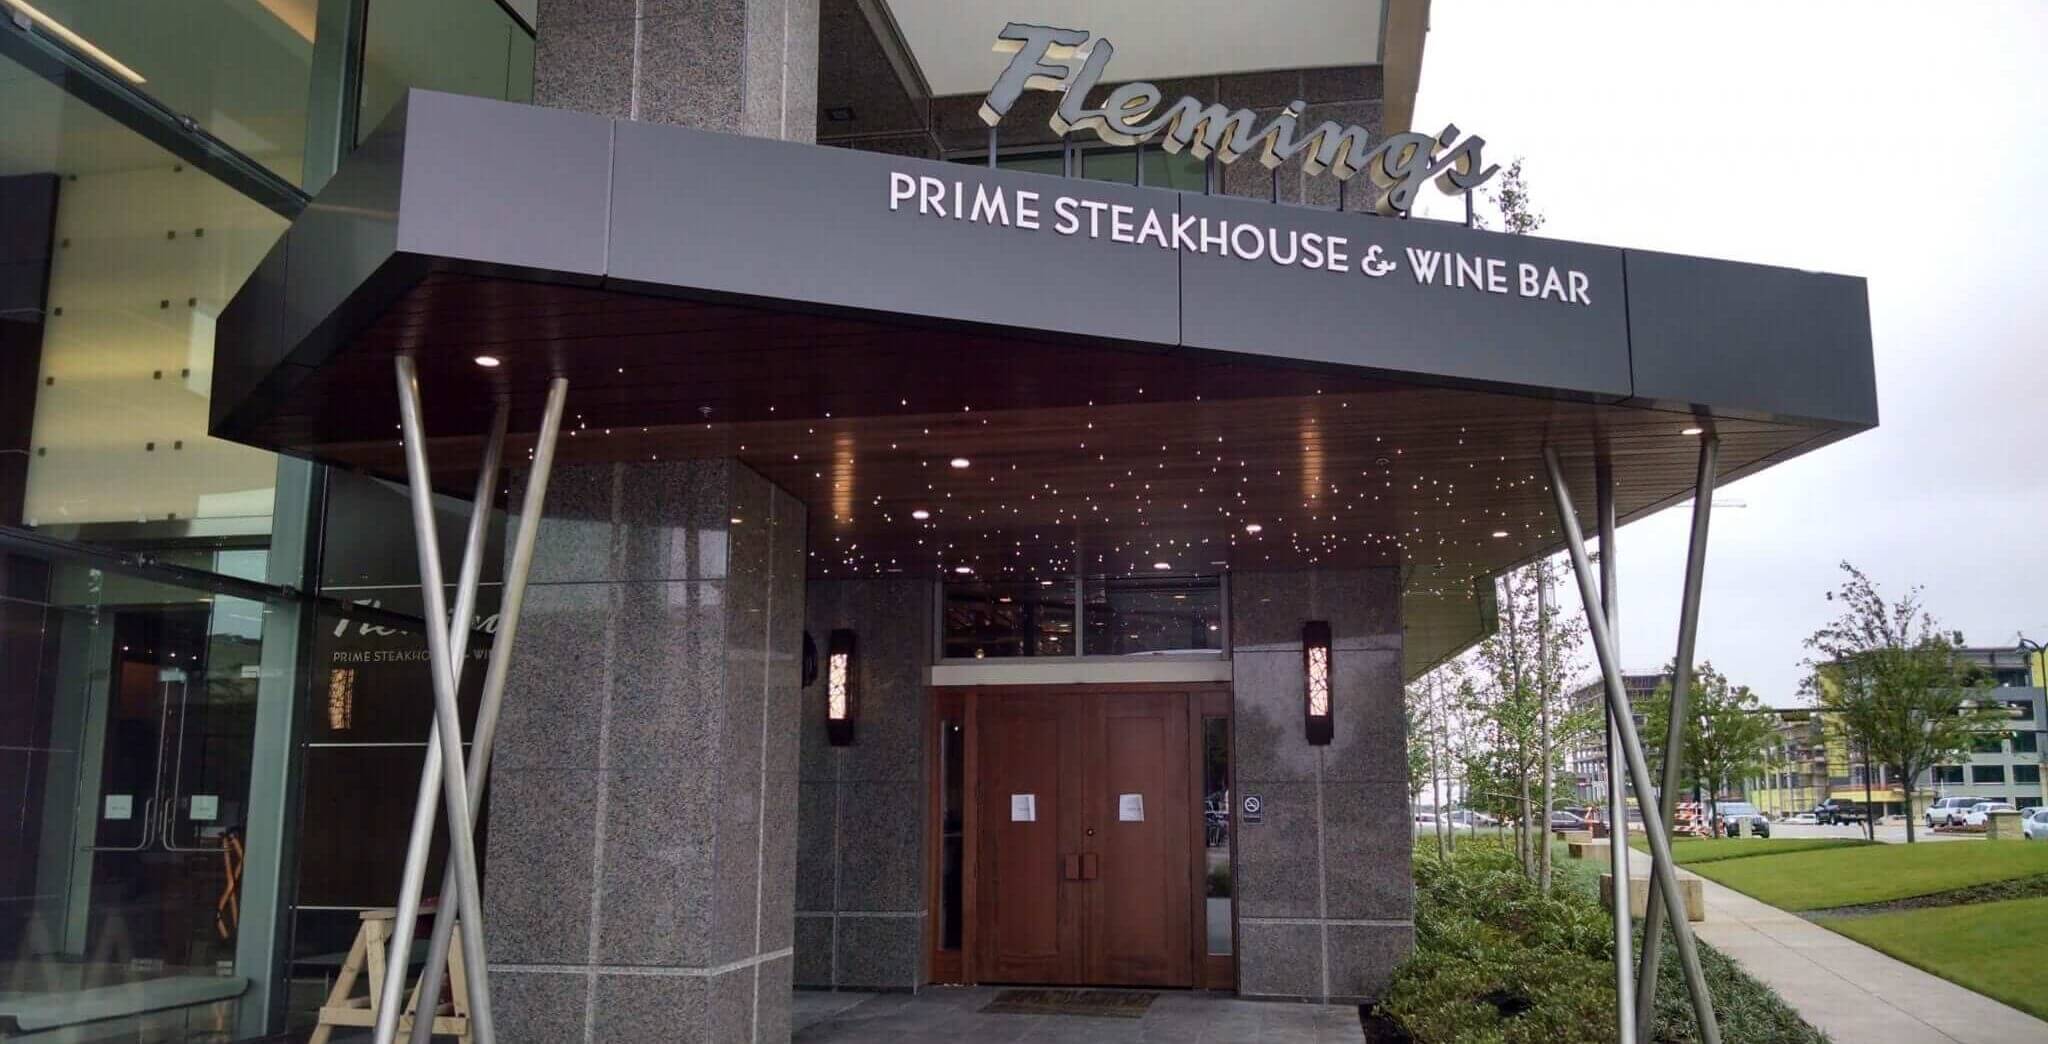 Fleming's Prim Steakhouse & Wine Bar